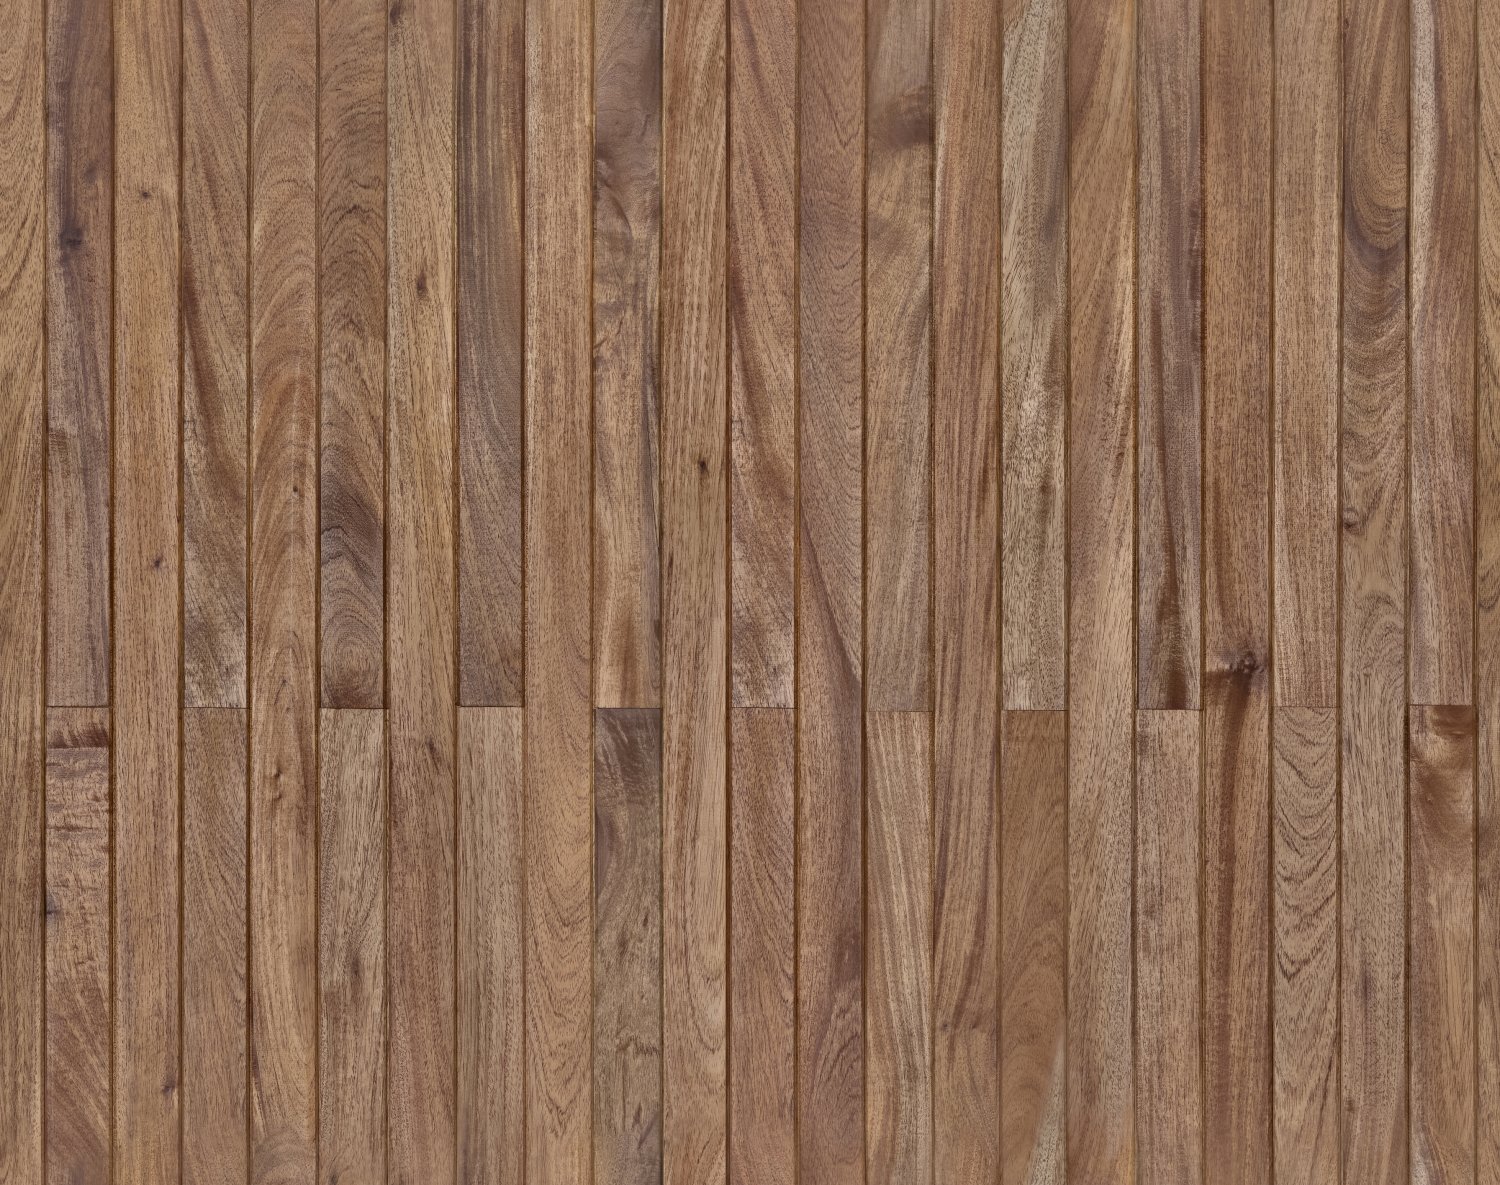 32 High Resolution 3K Architectural Wood Flooring Seamless Textures 3D